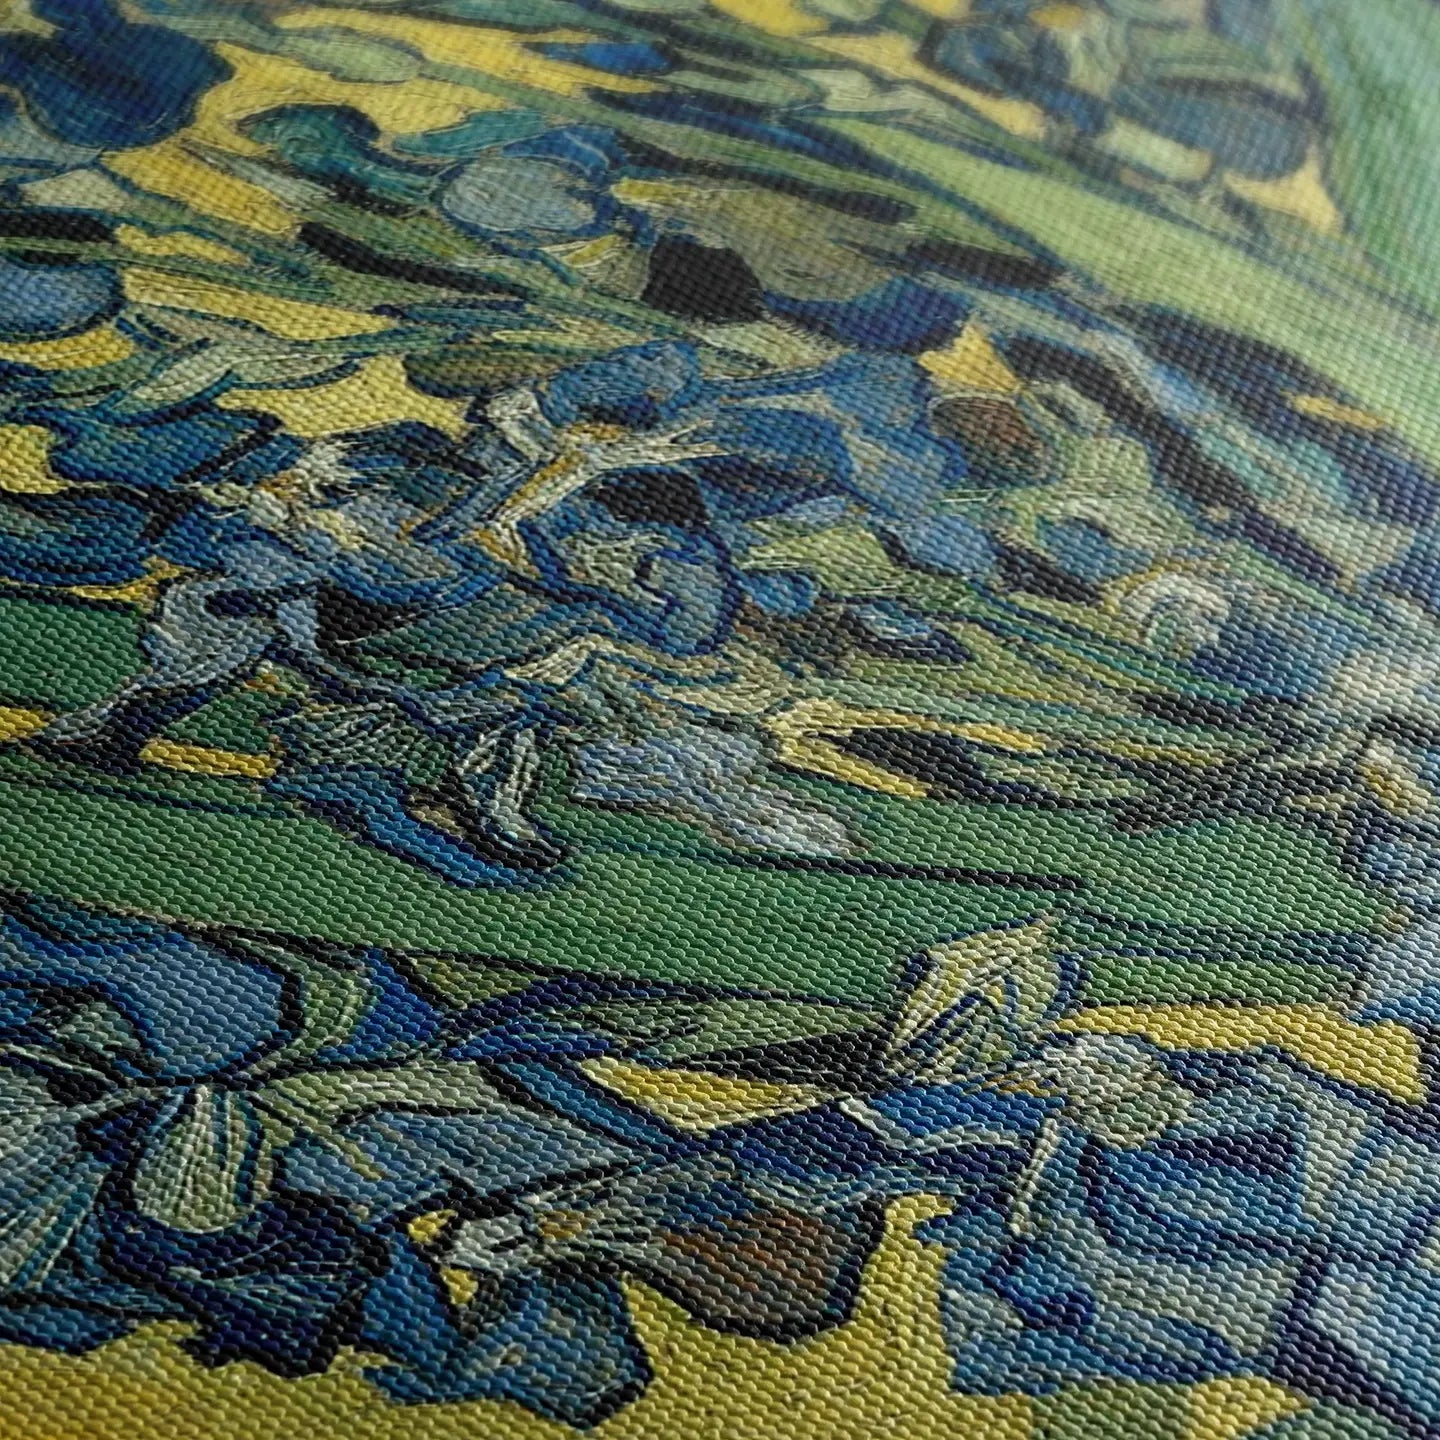 Irises (1890) by Vincent van Gogh